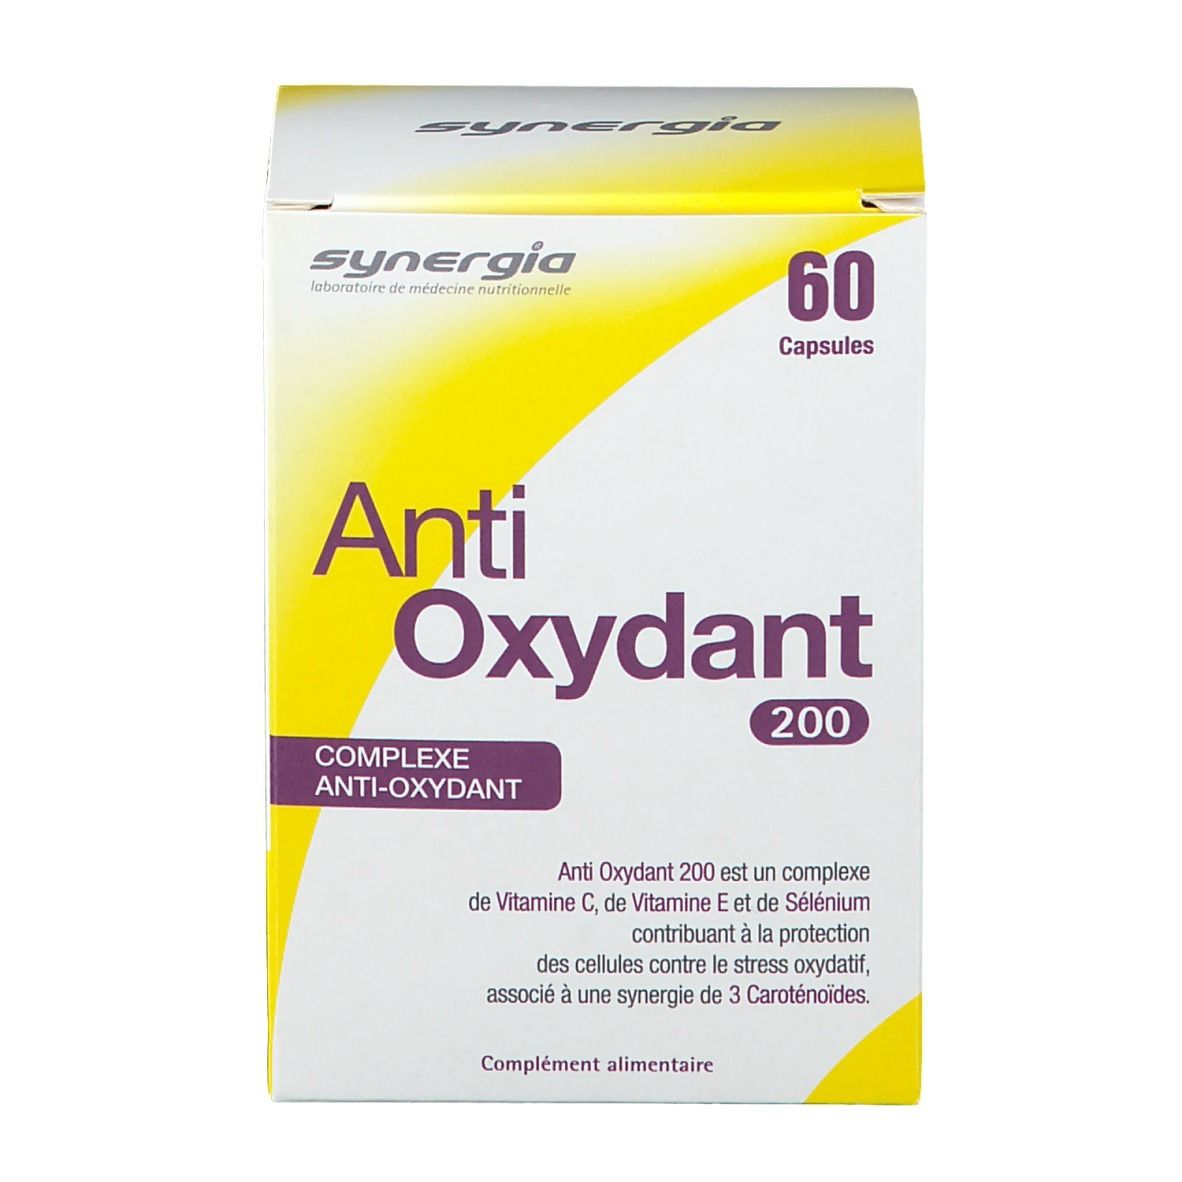 synergia Anti-Oxidationsmittel 200